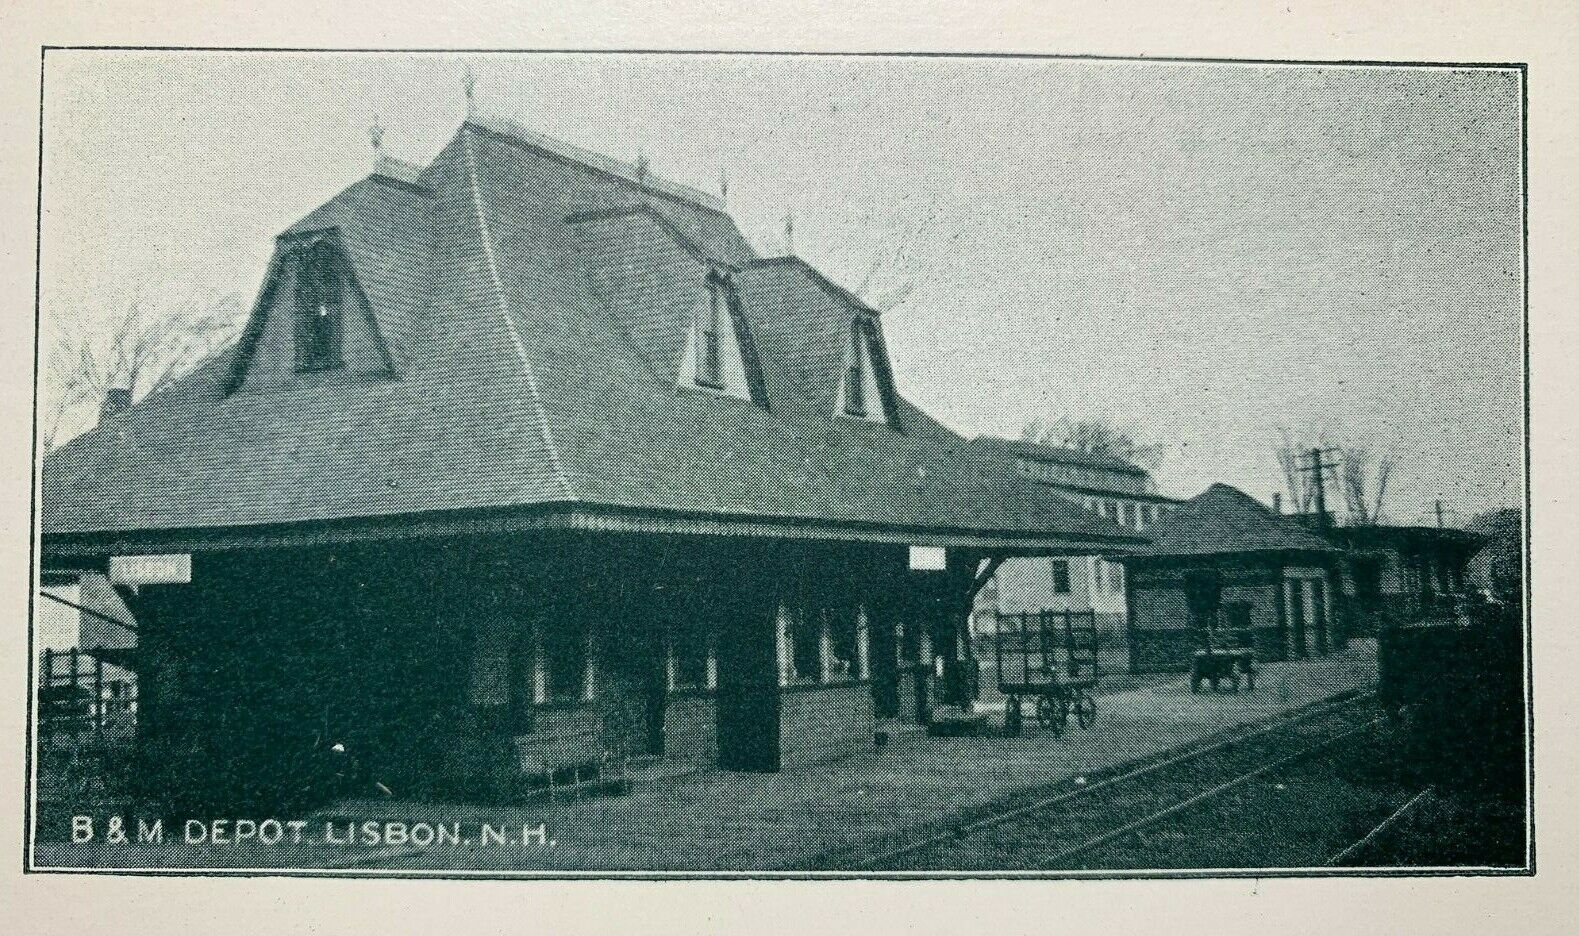 Postcard Lisbon NH - c1900s Boston and Maine Railroad Depot